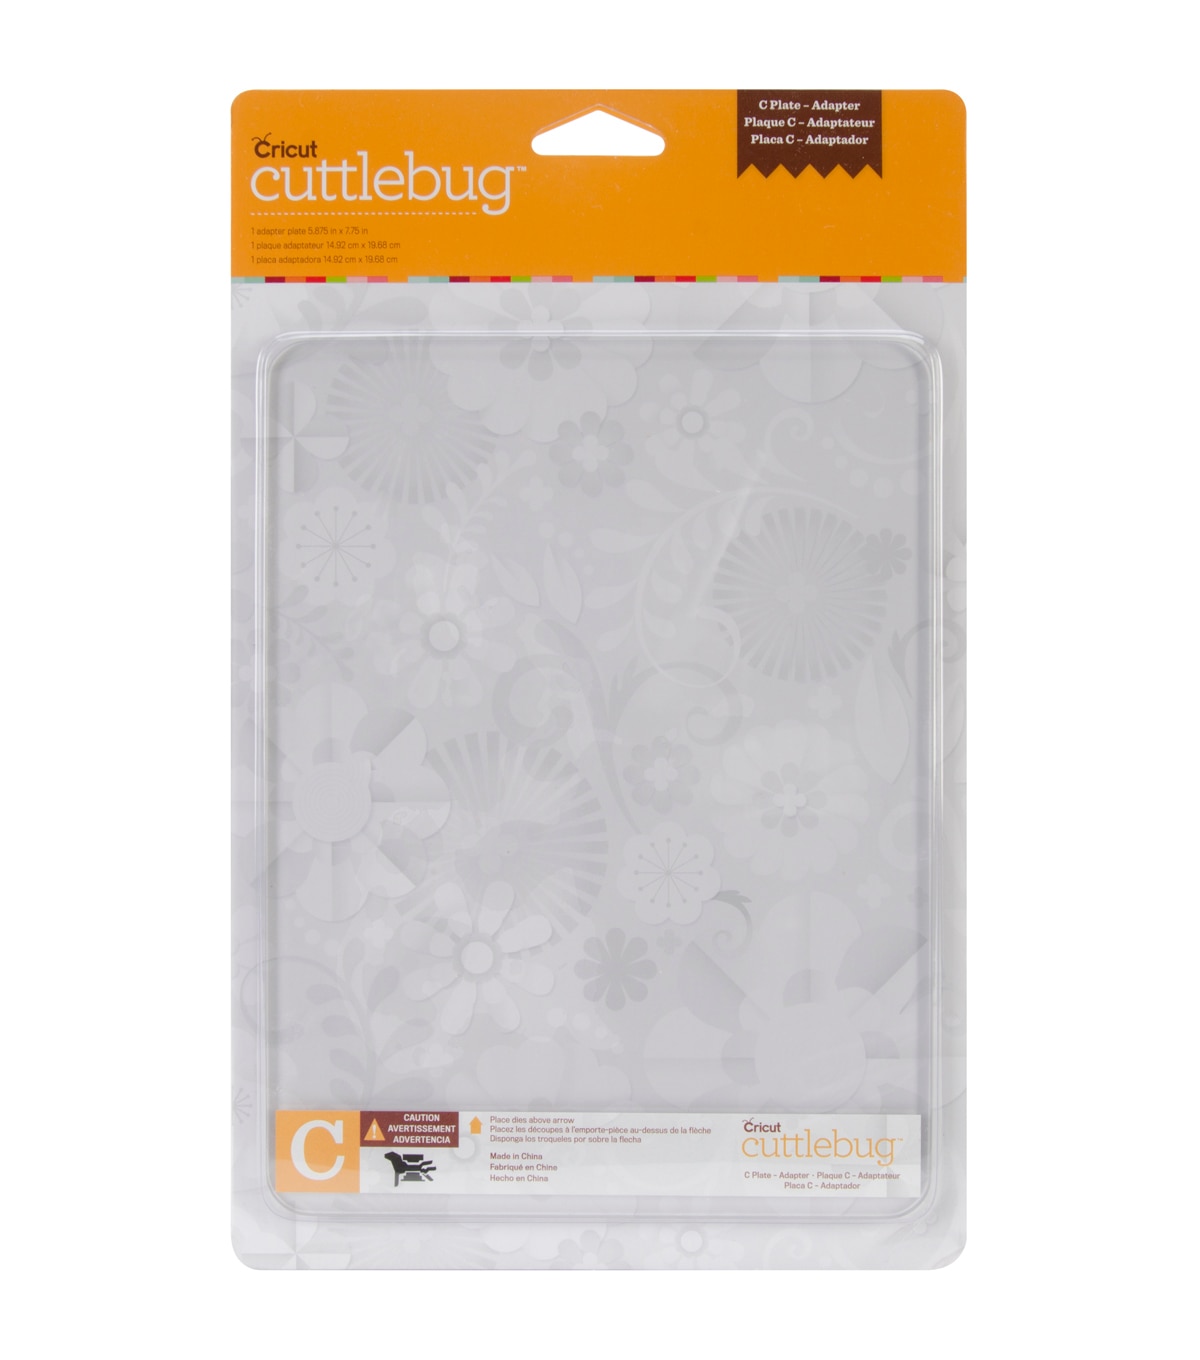 Cuttlebug Compatibility Chart